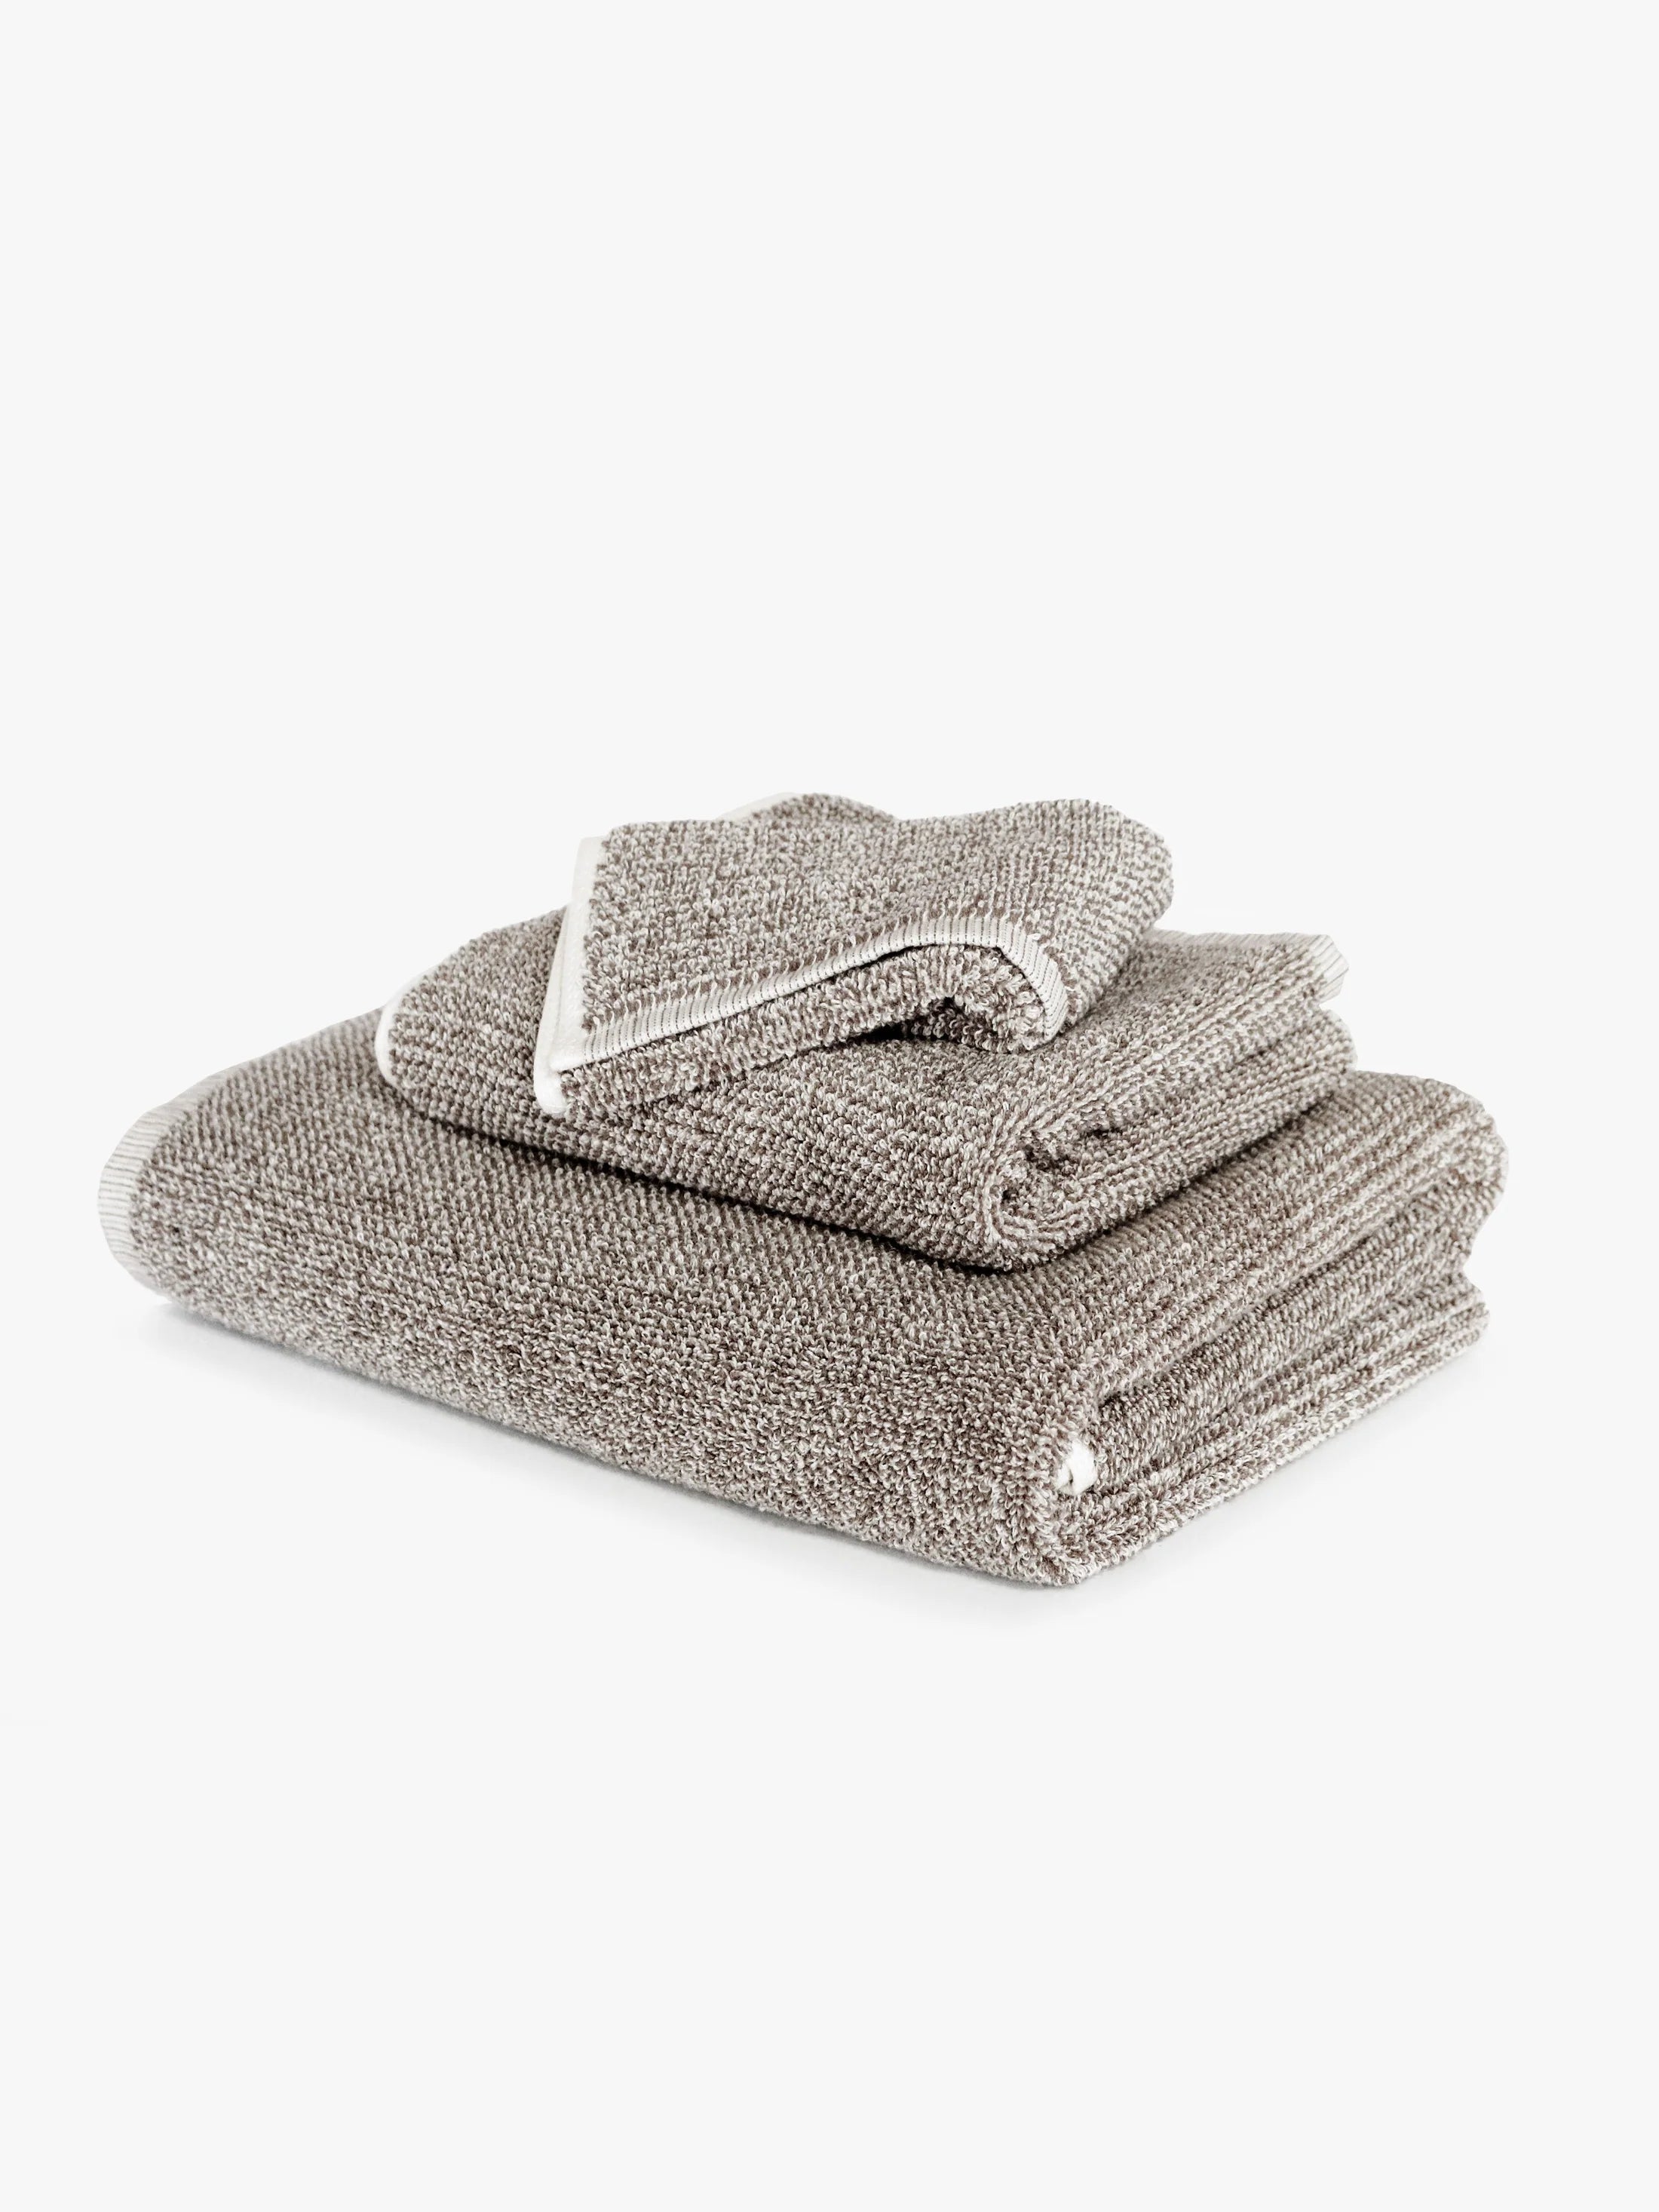 Tweed Light Hand Towel